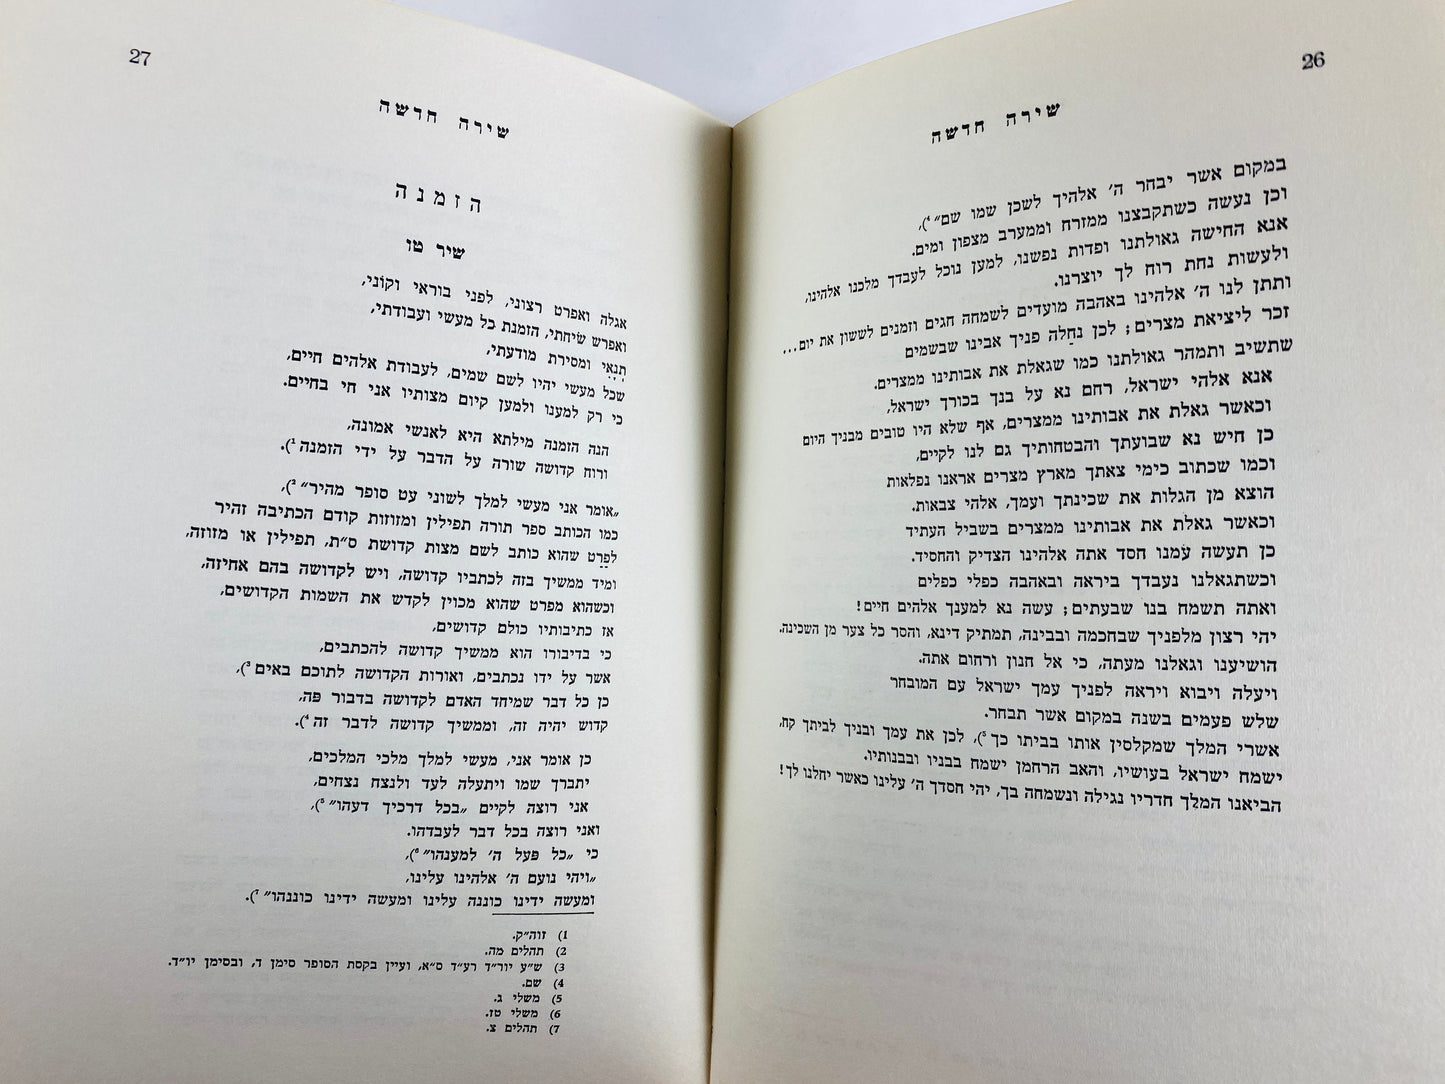 Myer Schwartz Shirah Hadashah Vintage Jewish Hebrew Book of Prayers Siddur bible circa 1966